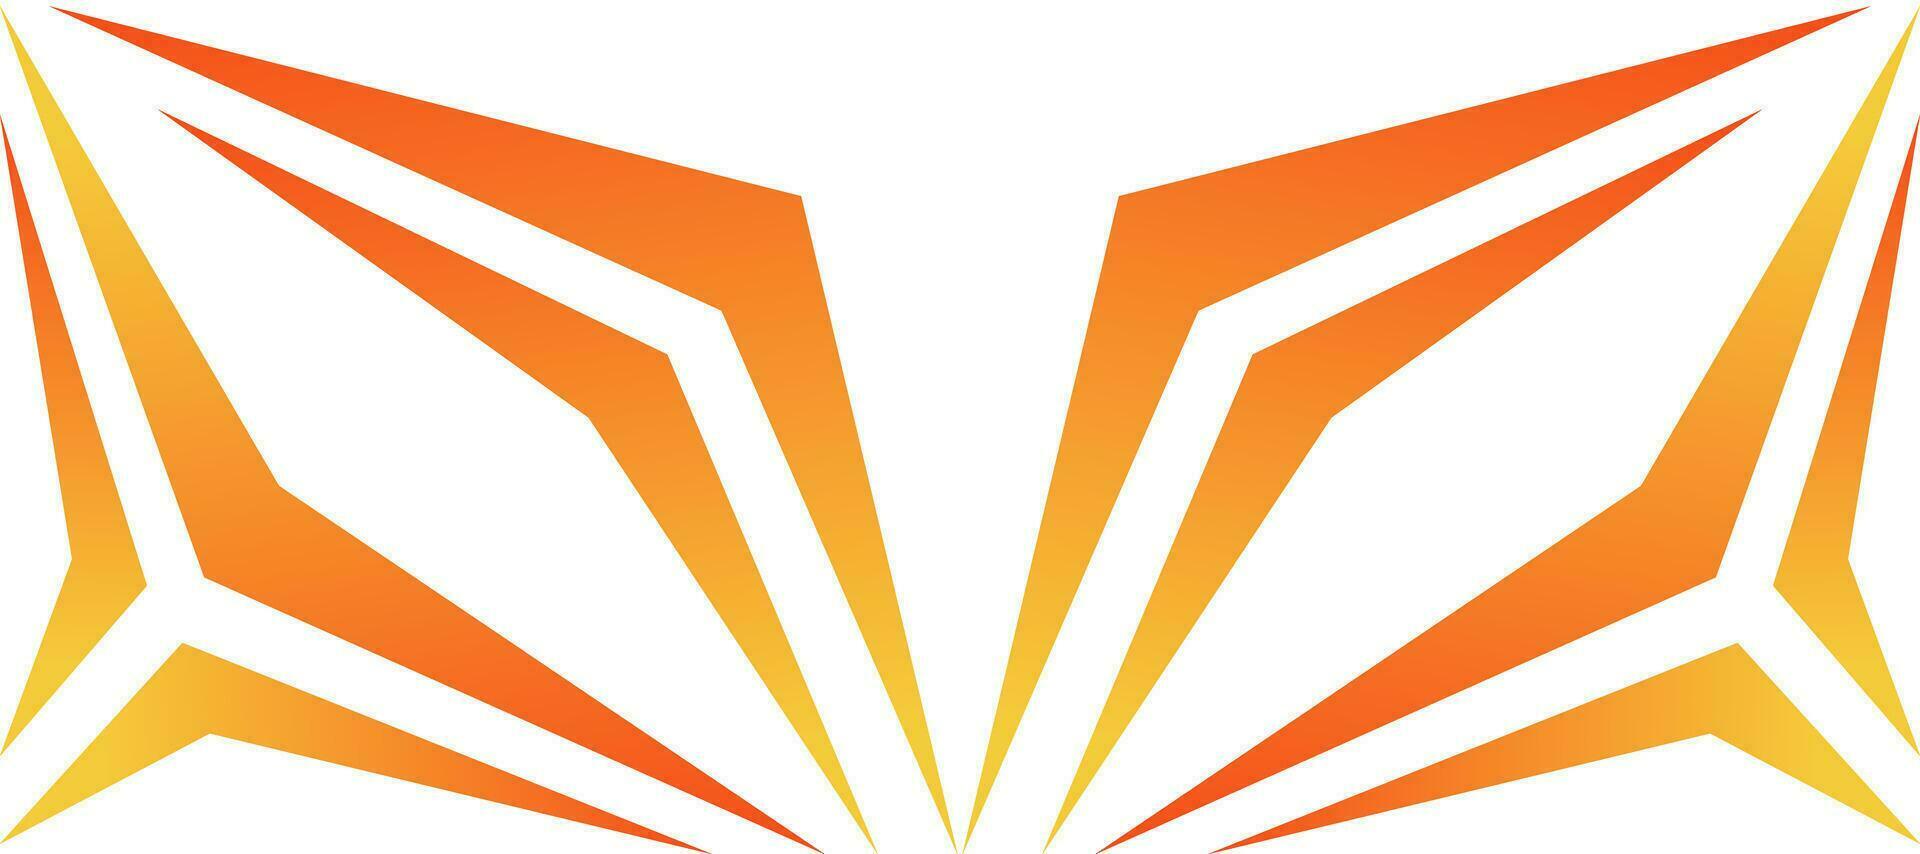 sportig pil skarp orange lutning jersey bakgrund vektor